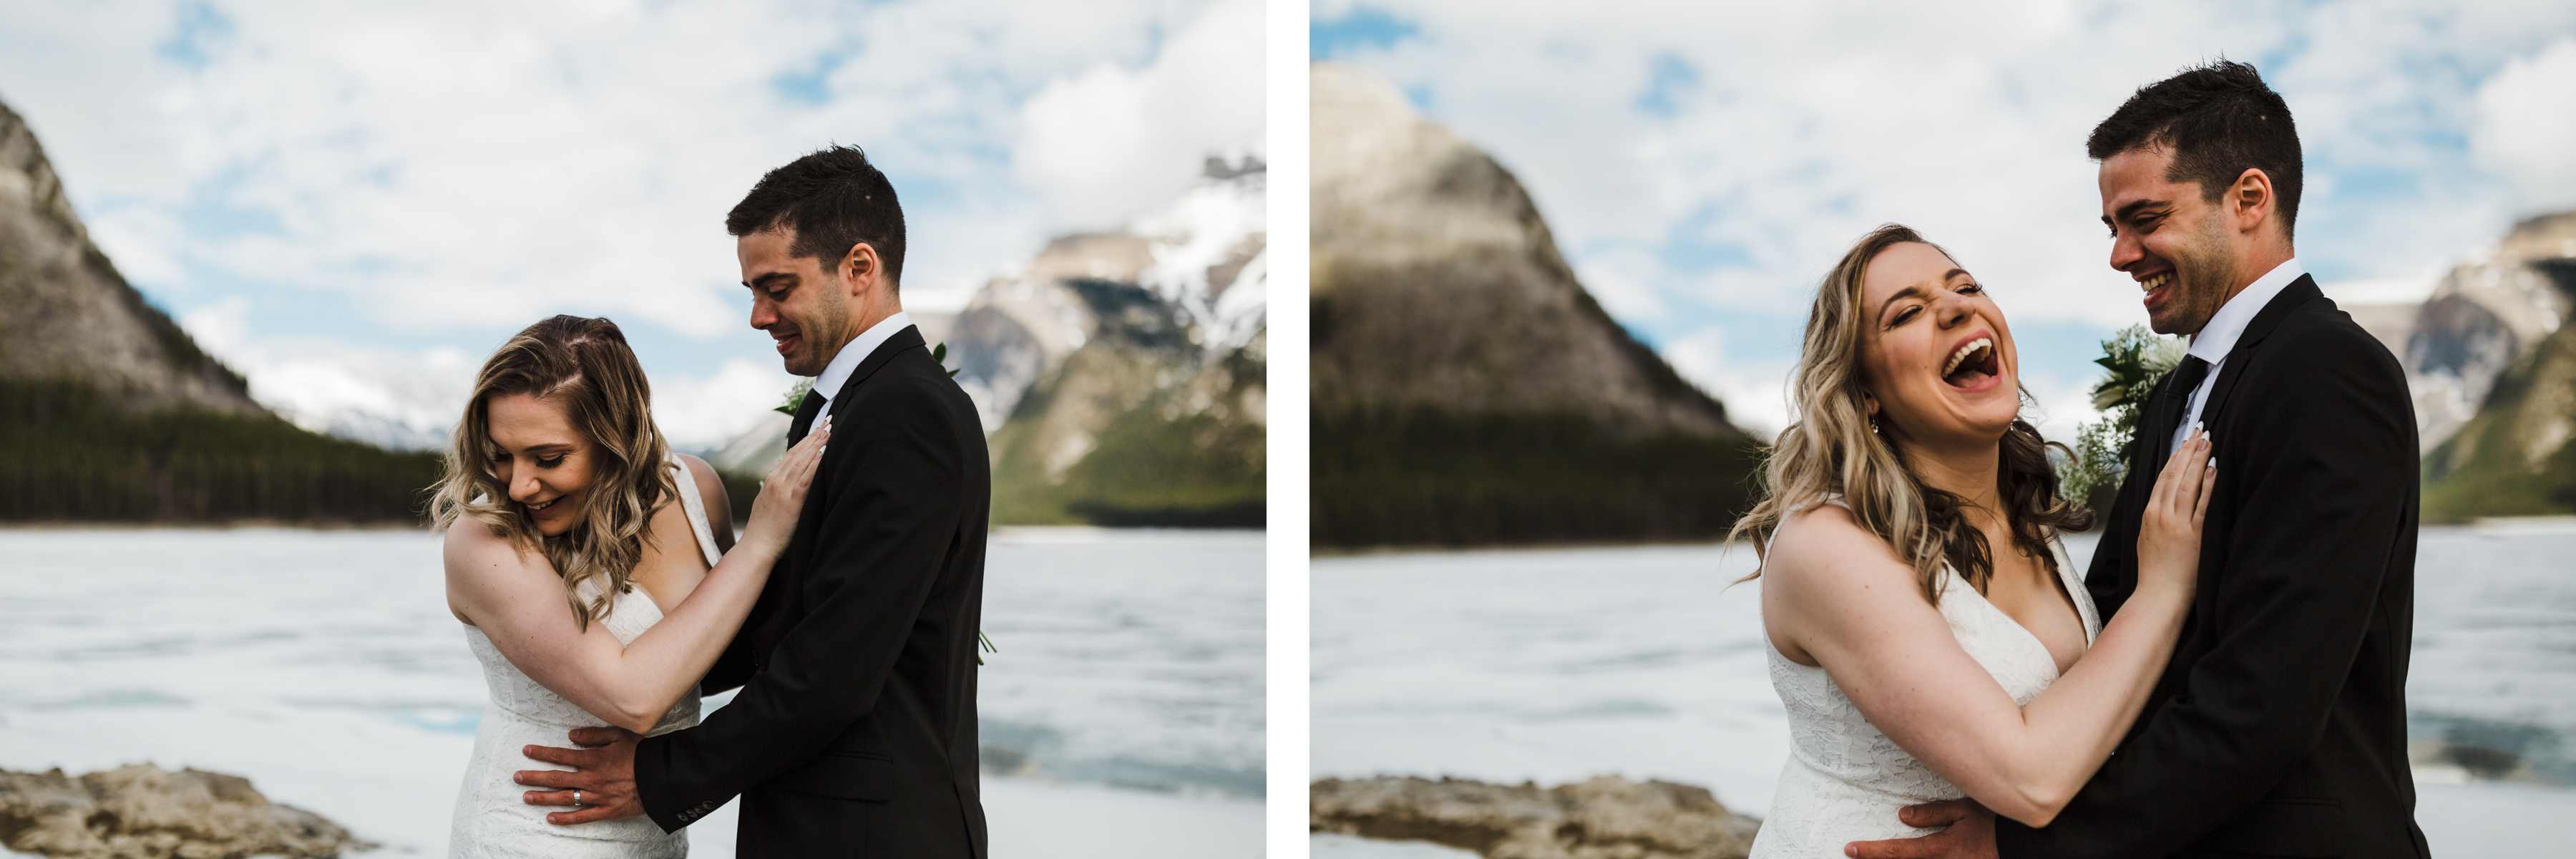 Banff Adventure Wedding Photographers for Lake Minnewanka Elopement - Image 12